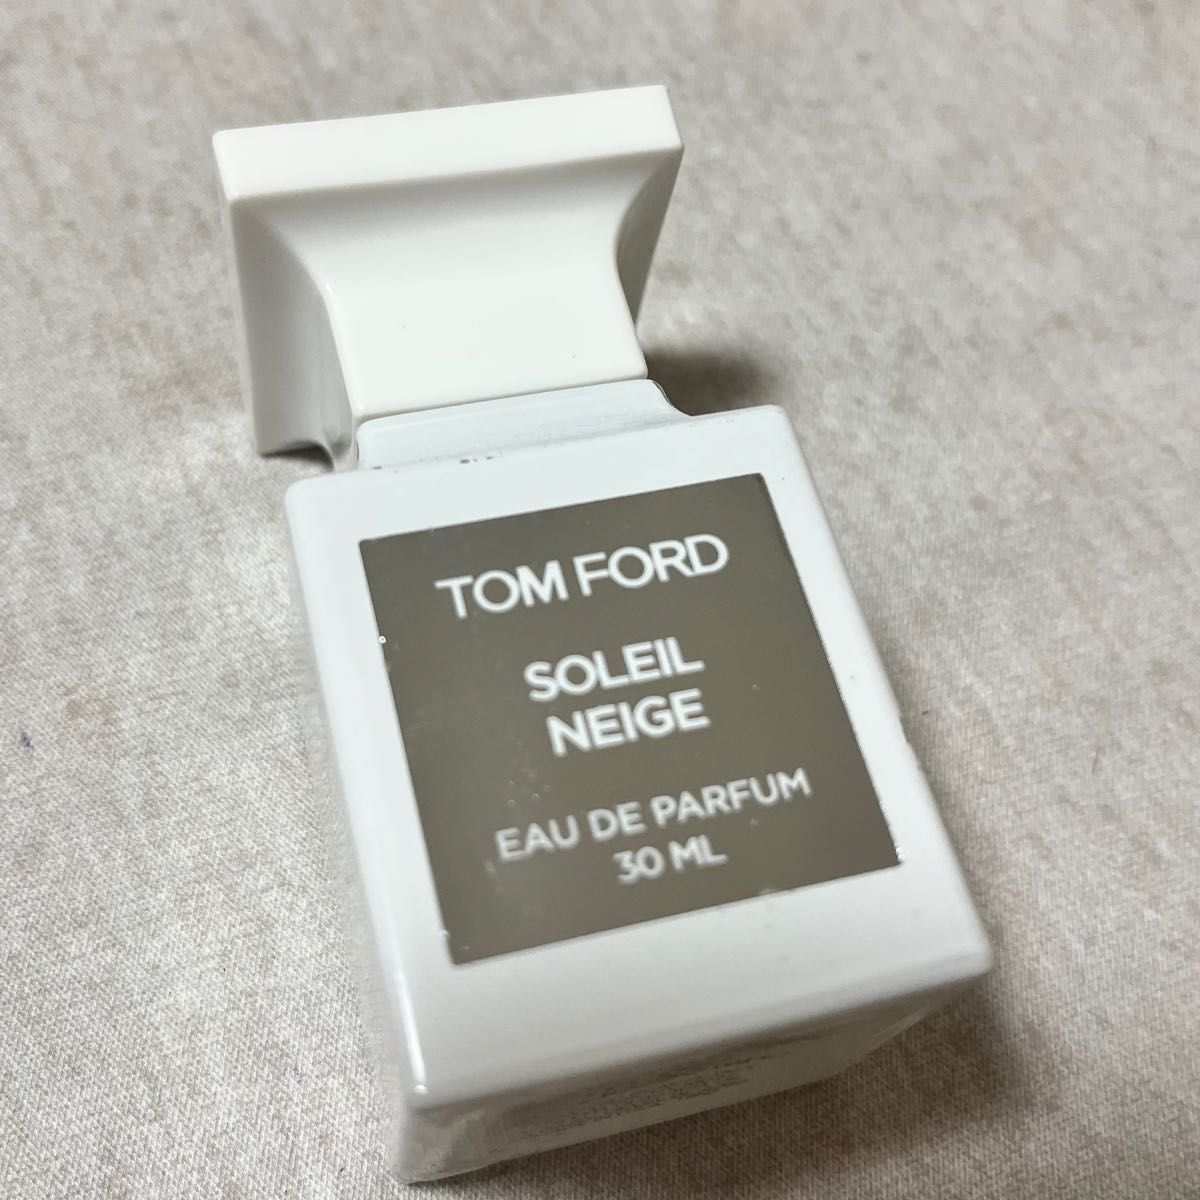 TOM FORD SOLEIL NEIGE 30ml 正規品 空瓶 箱付き 説明書付き